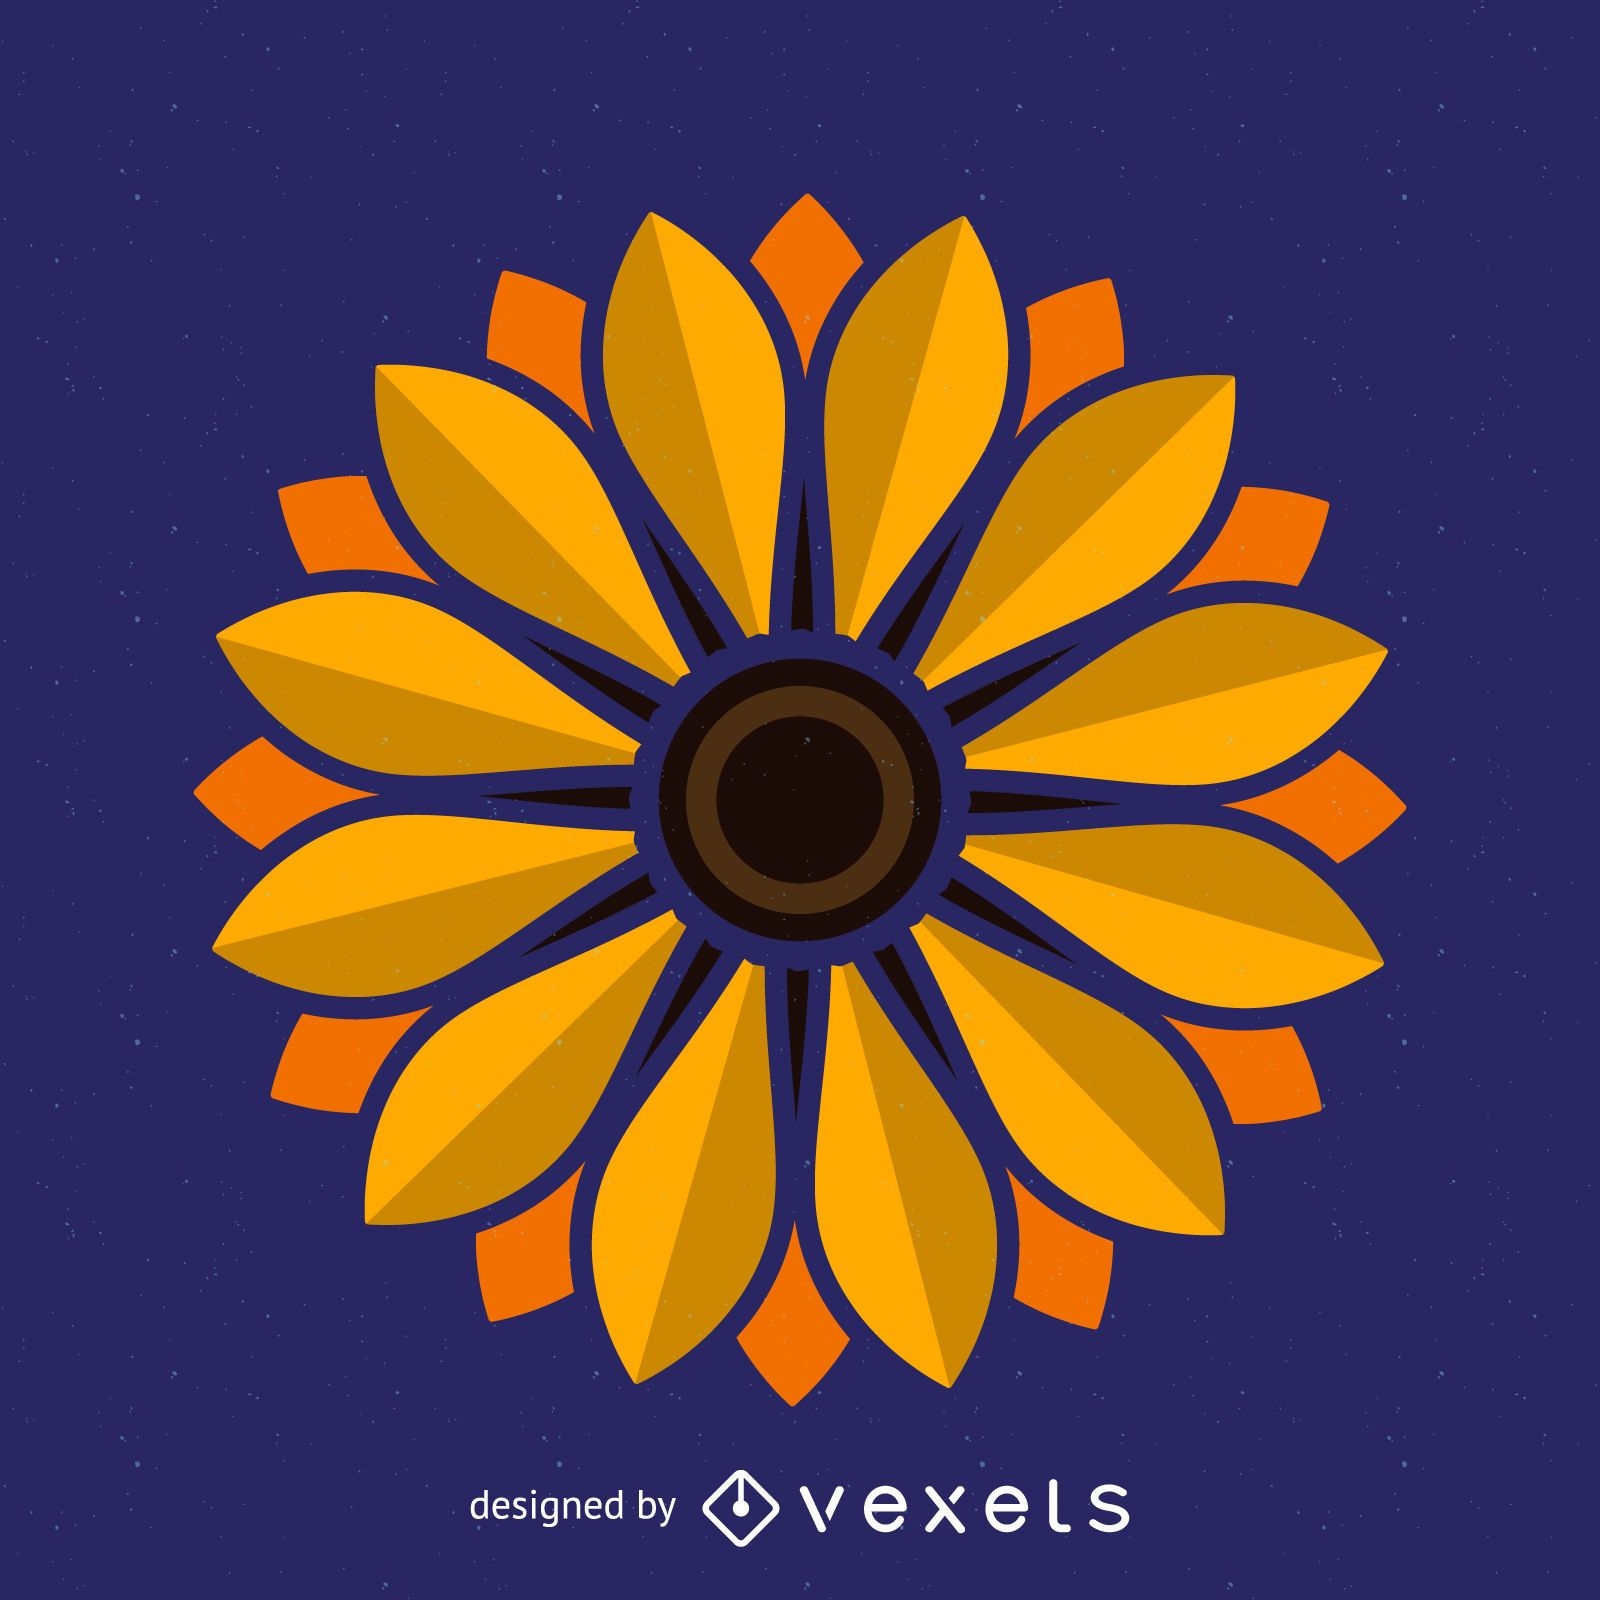 Minimalist sunflower illustration